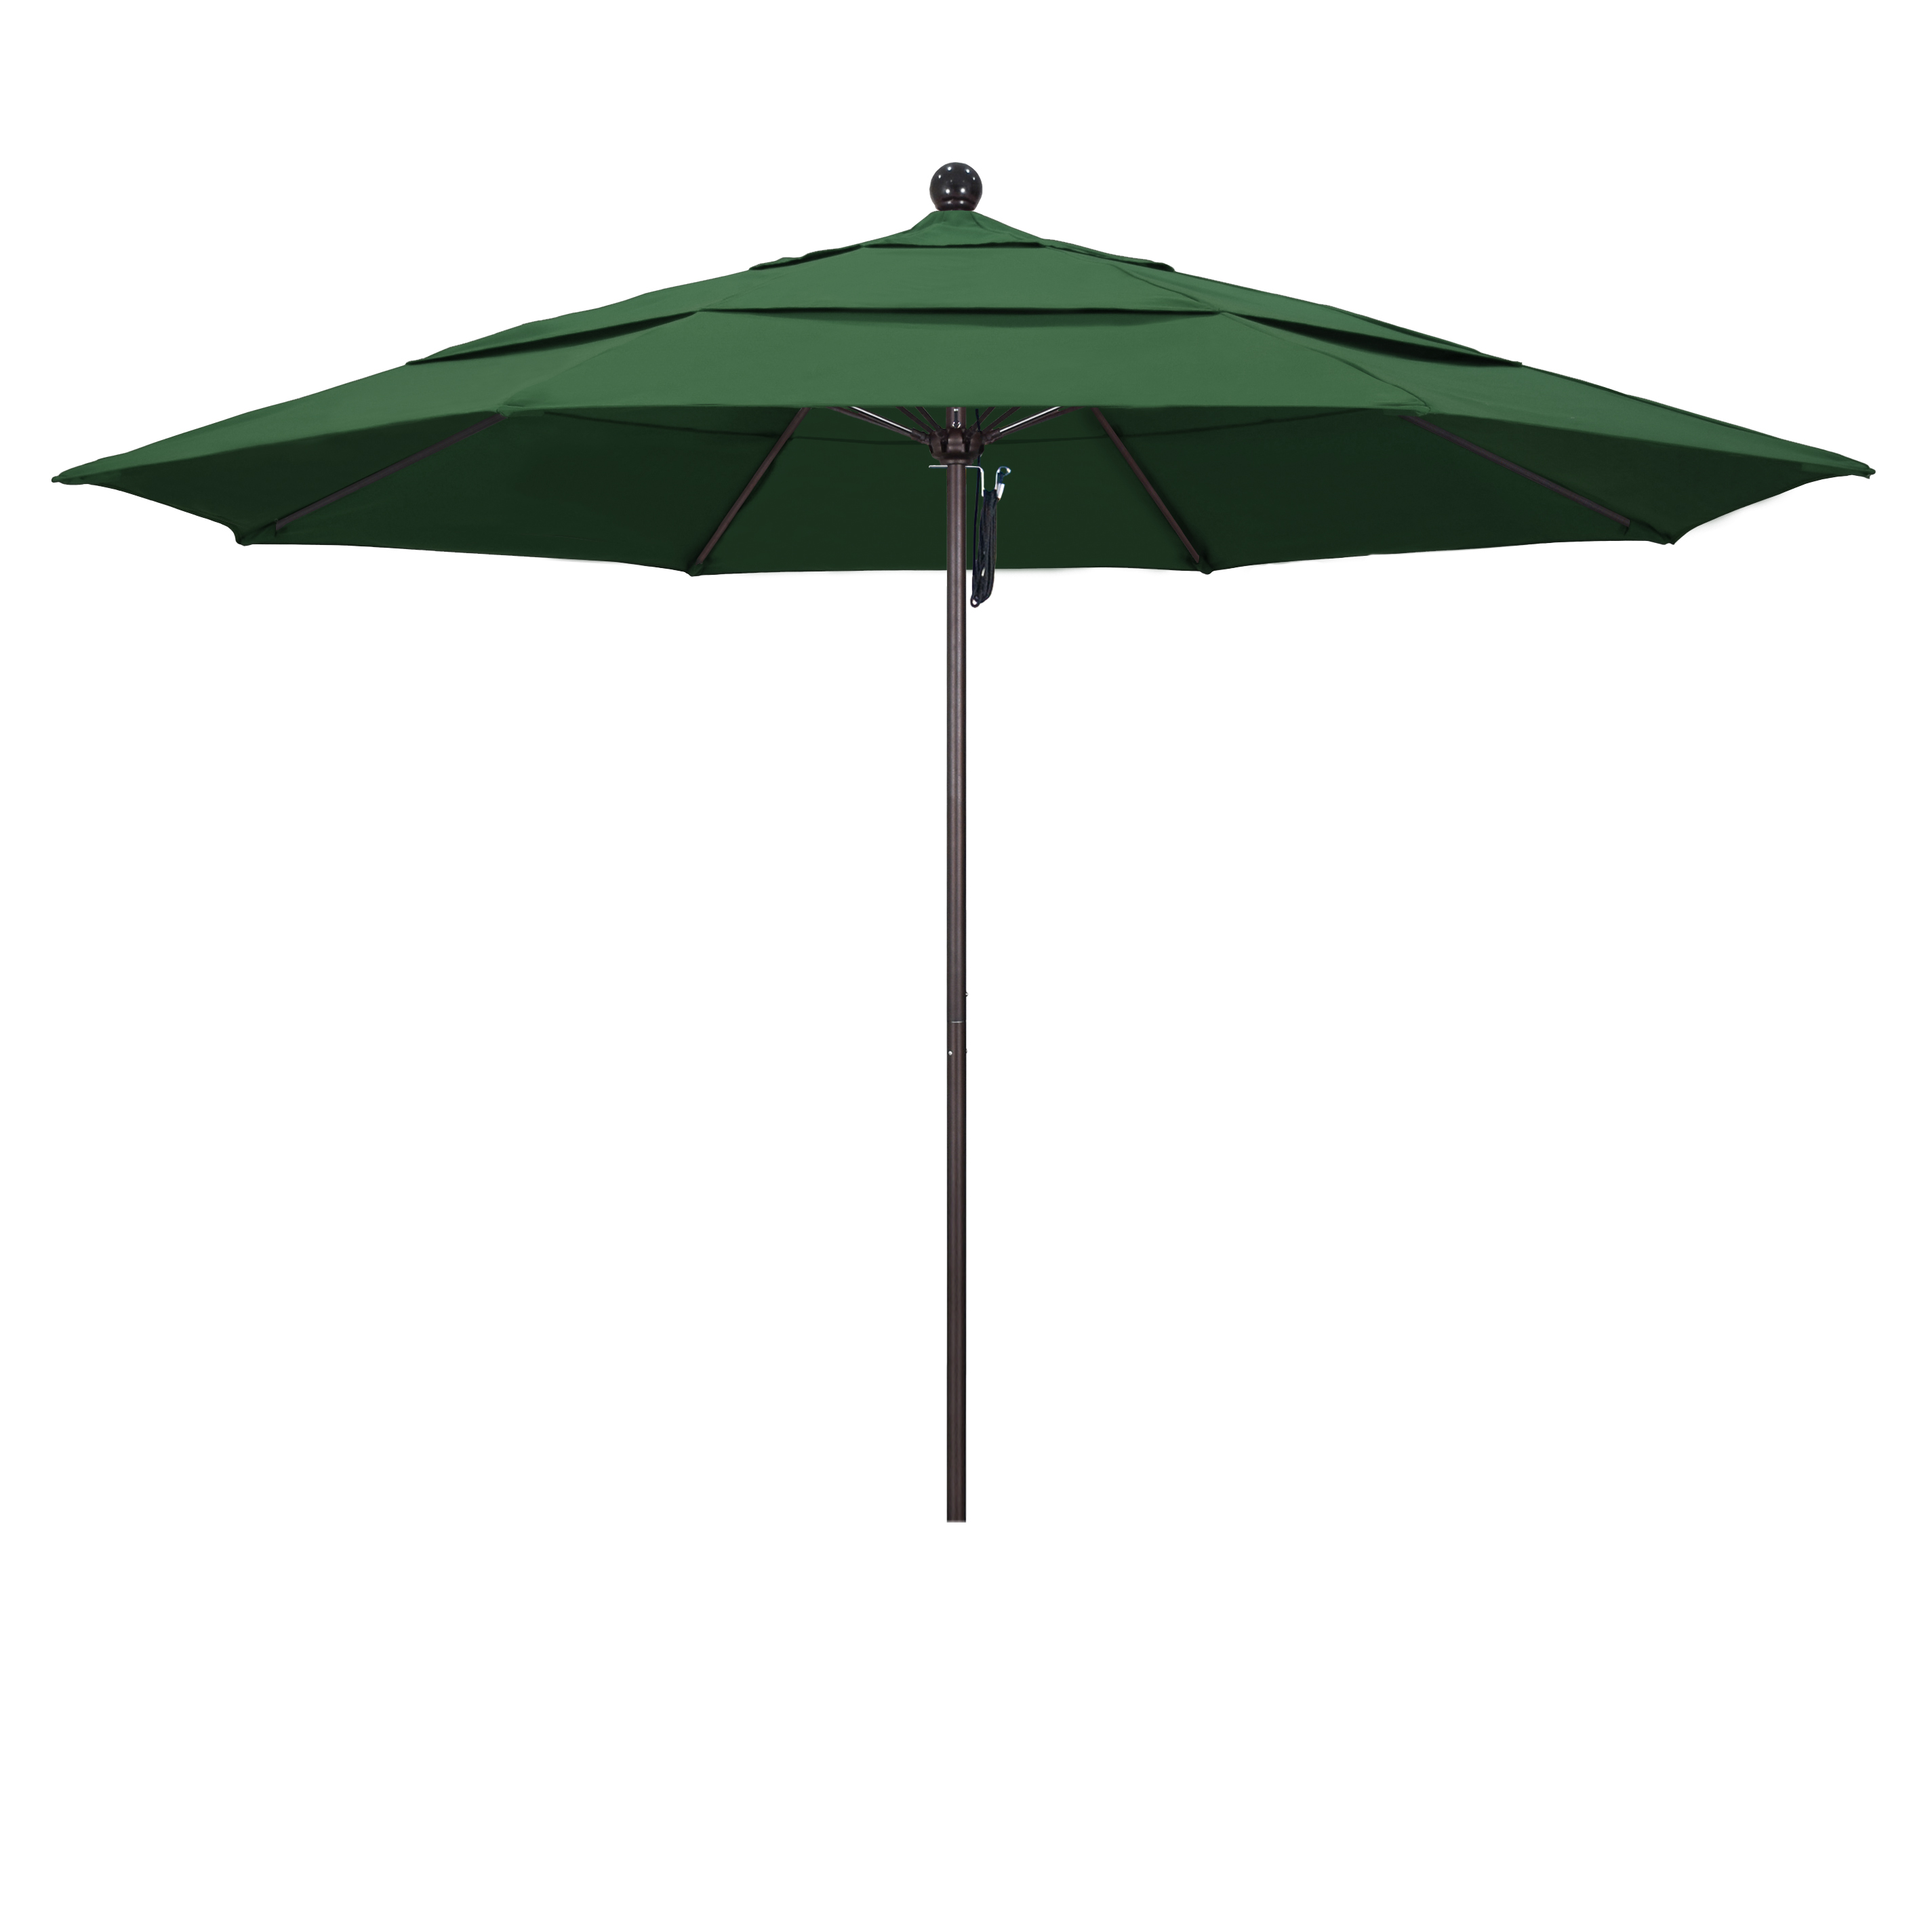 Picture of California Umbrella ALTO118117-F08-DWV 11 ft. Fiberglass Market Umbrella PO DVent Bronze-Olefin-Hunter Green